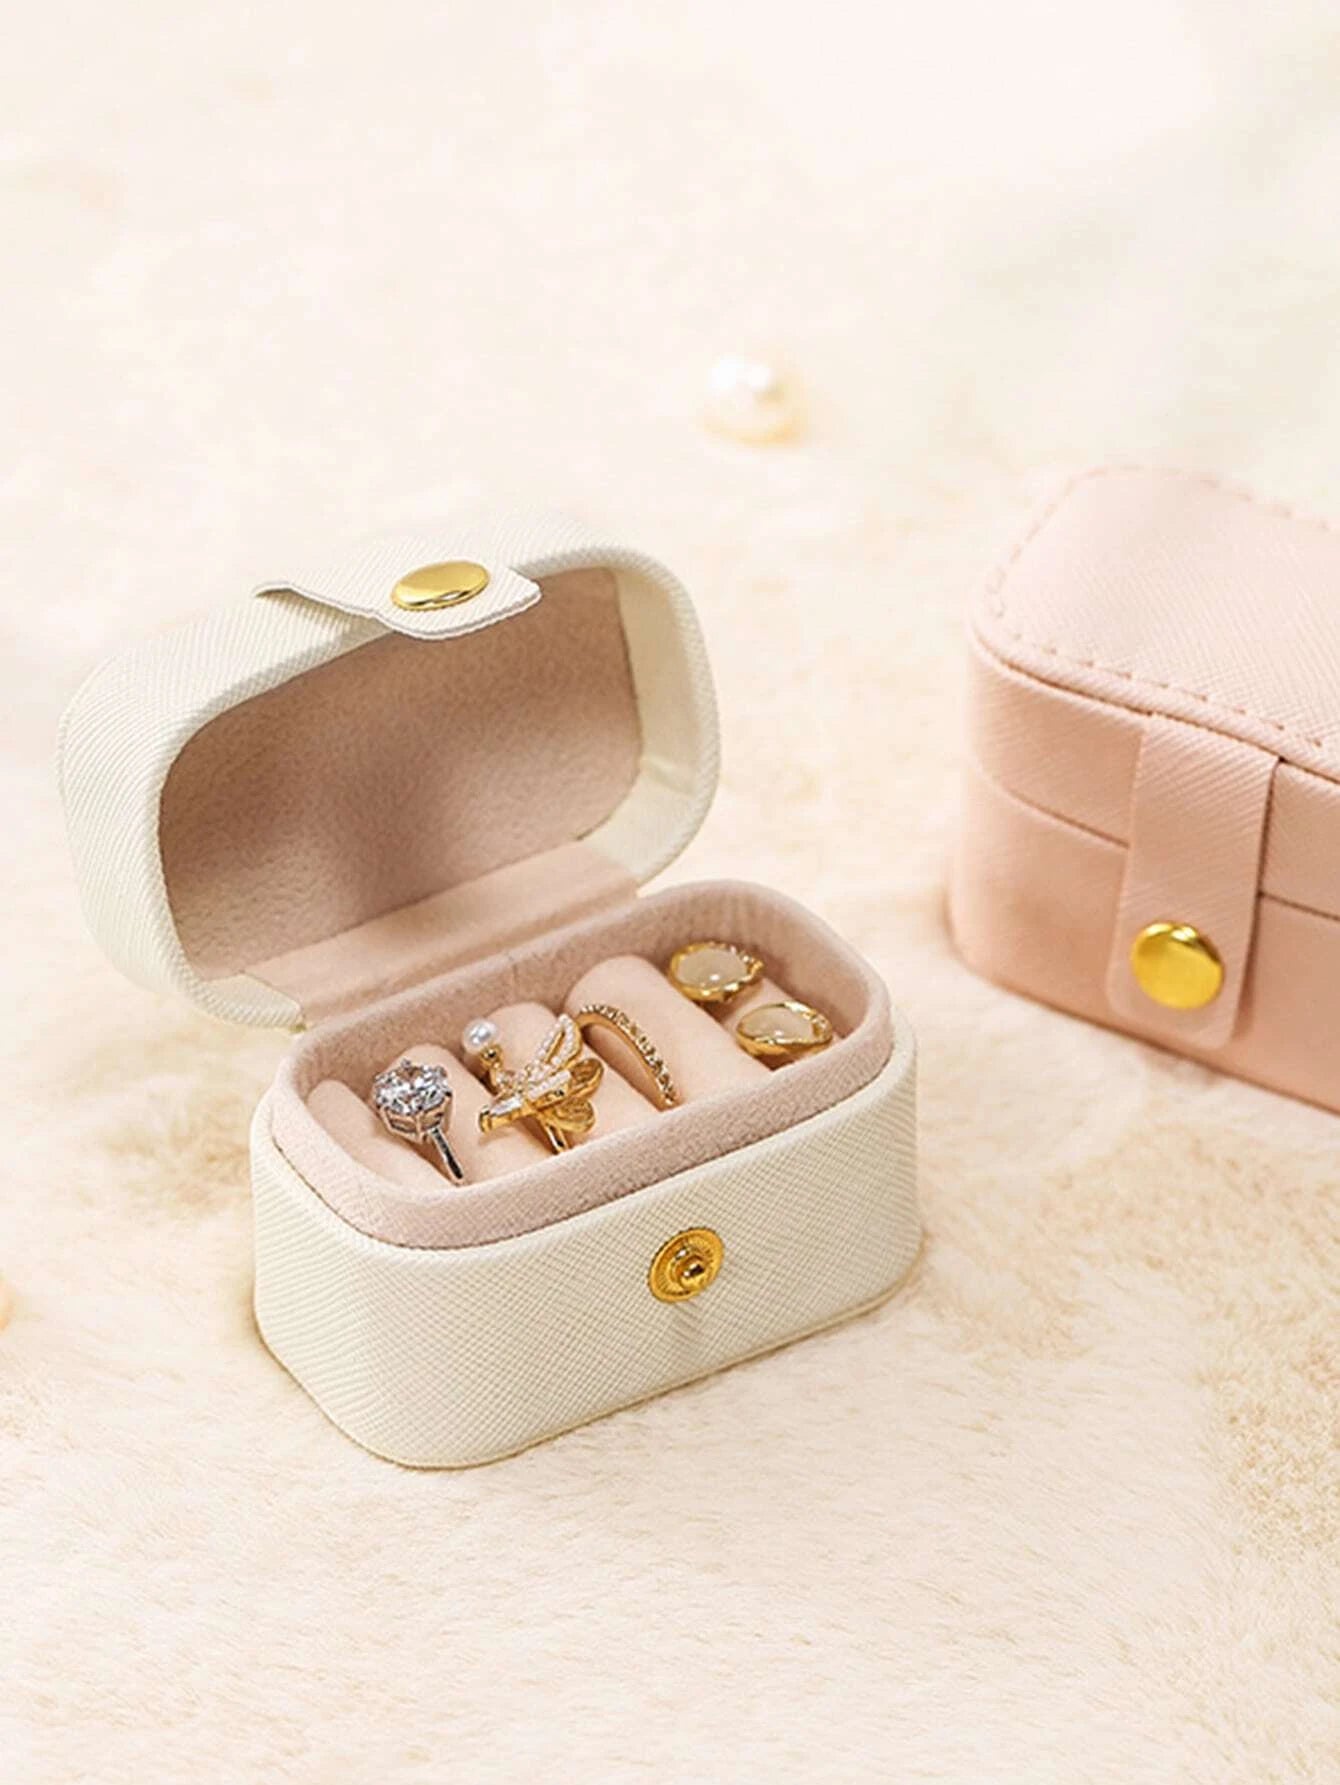 Ring Jewelry Box